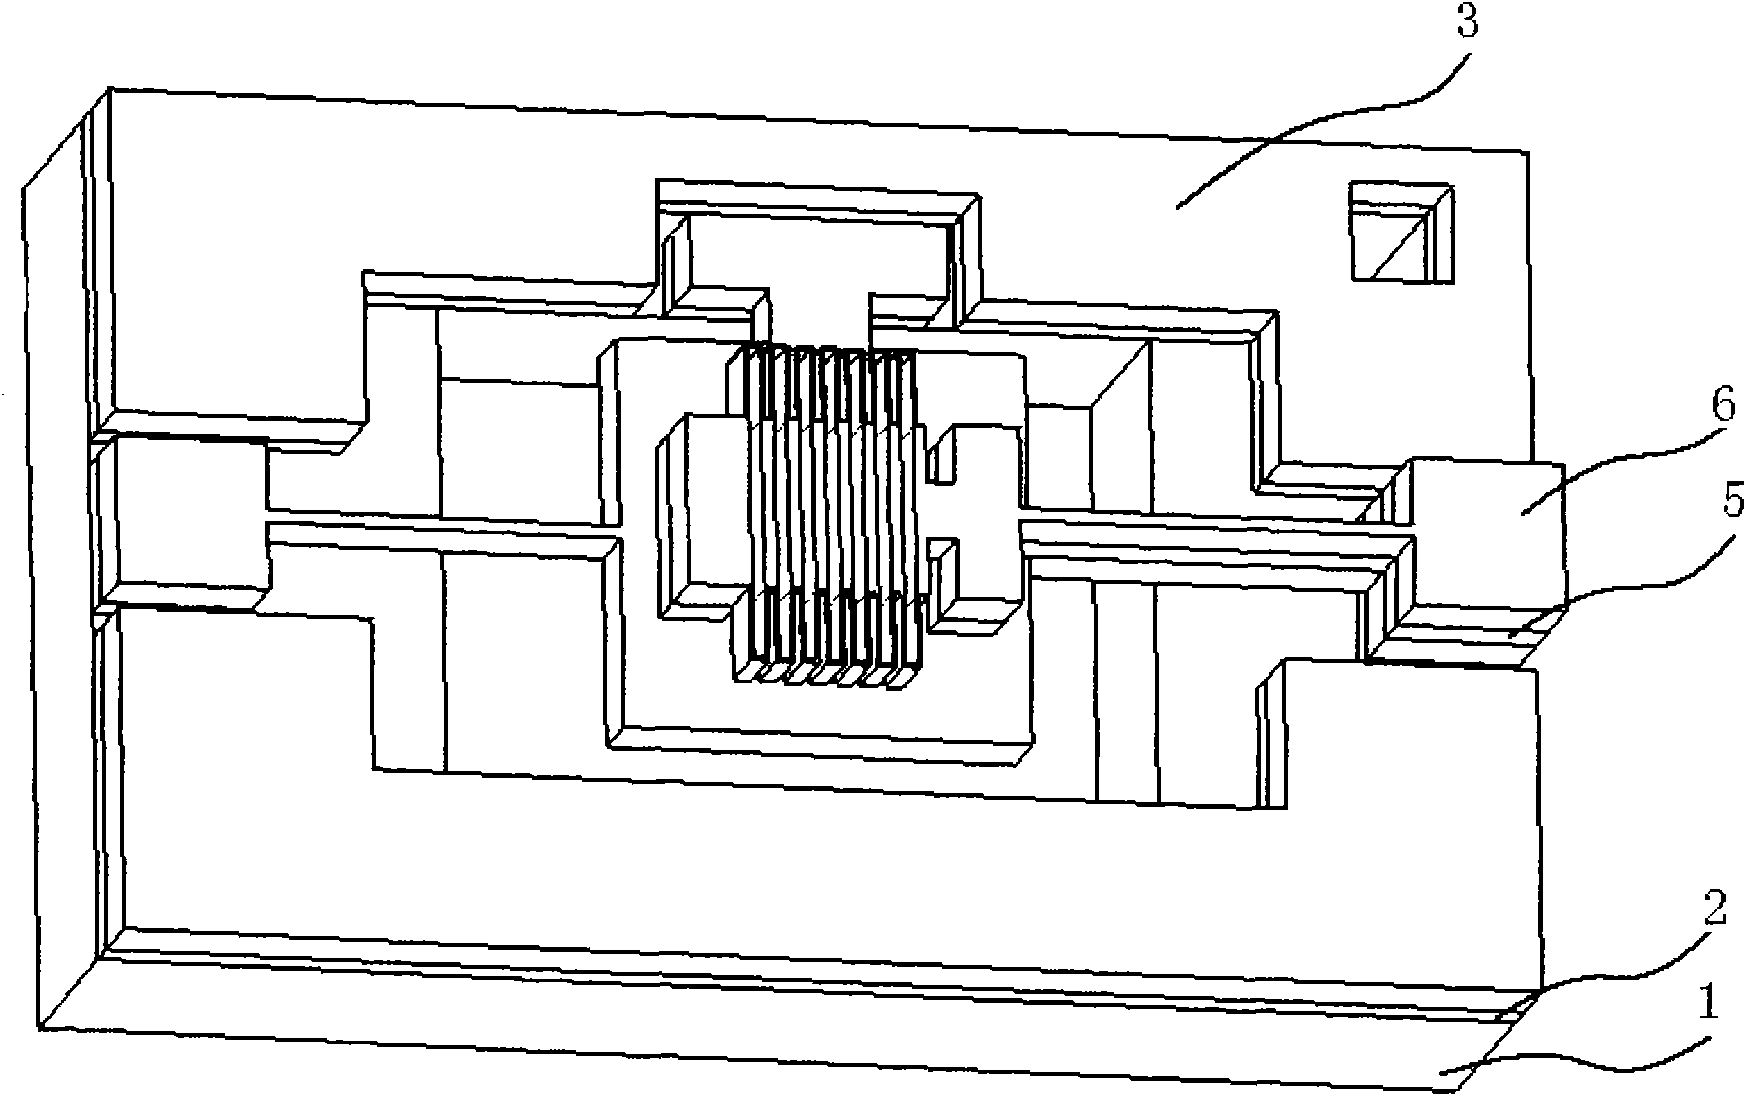 Micro-mechanical space optical modulator